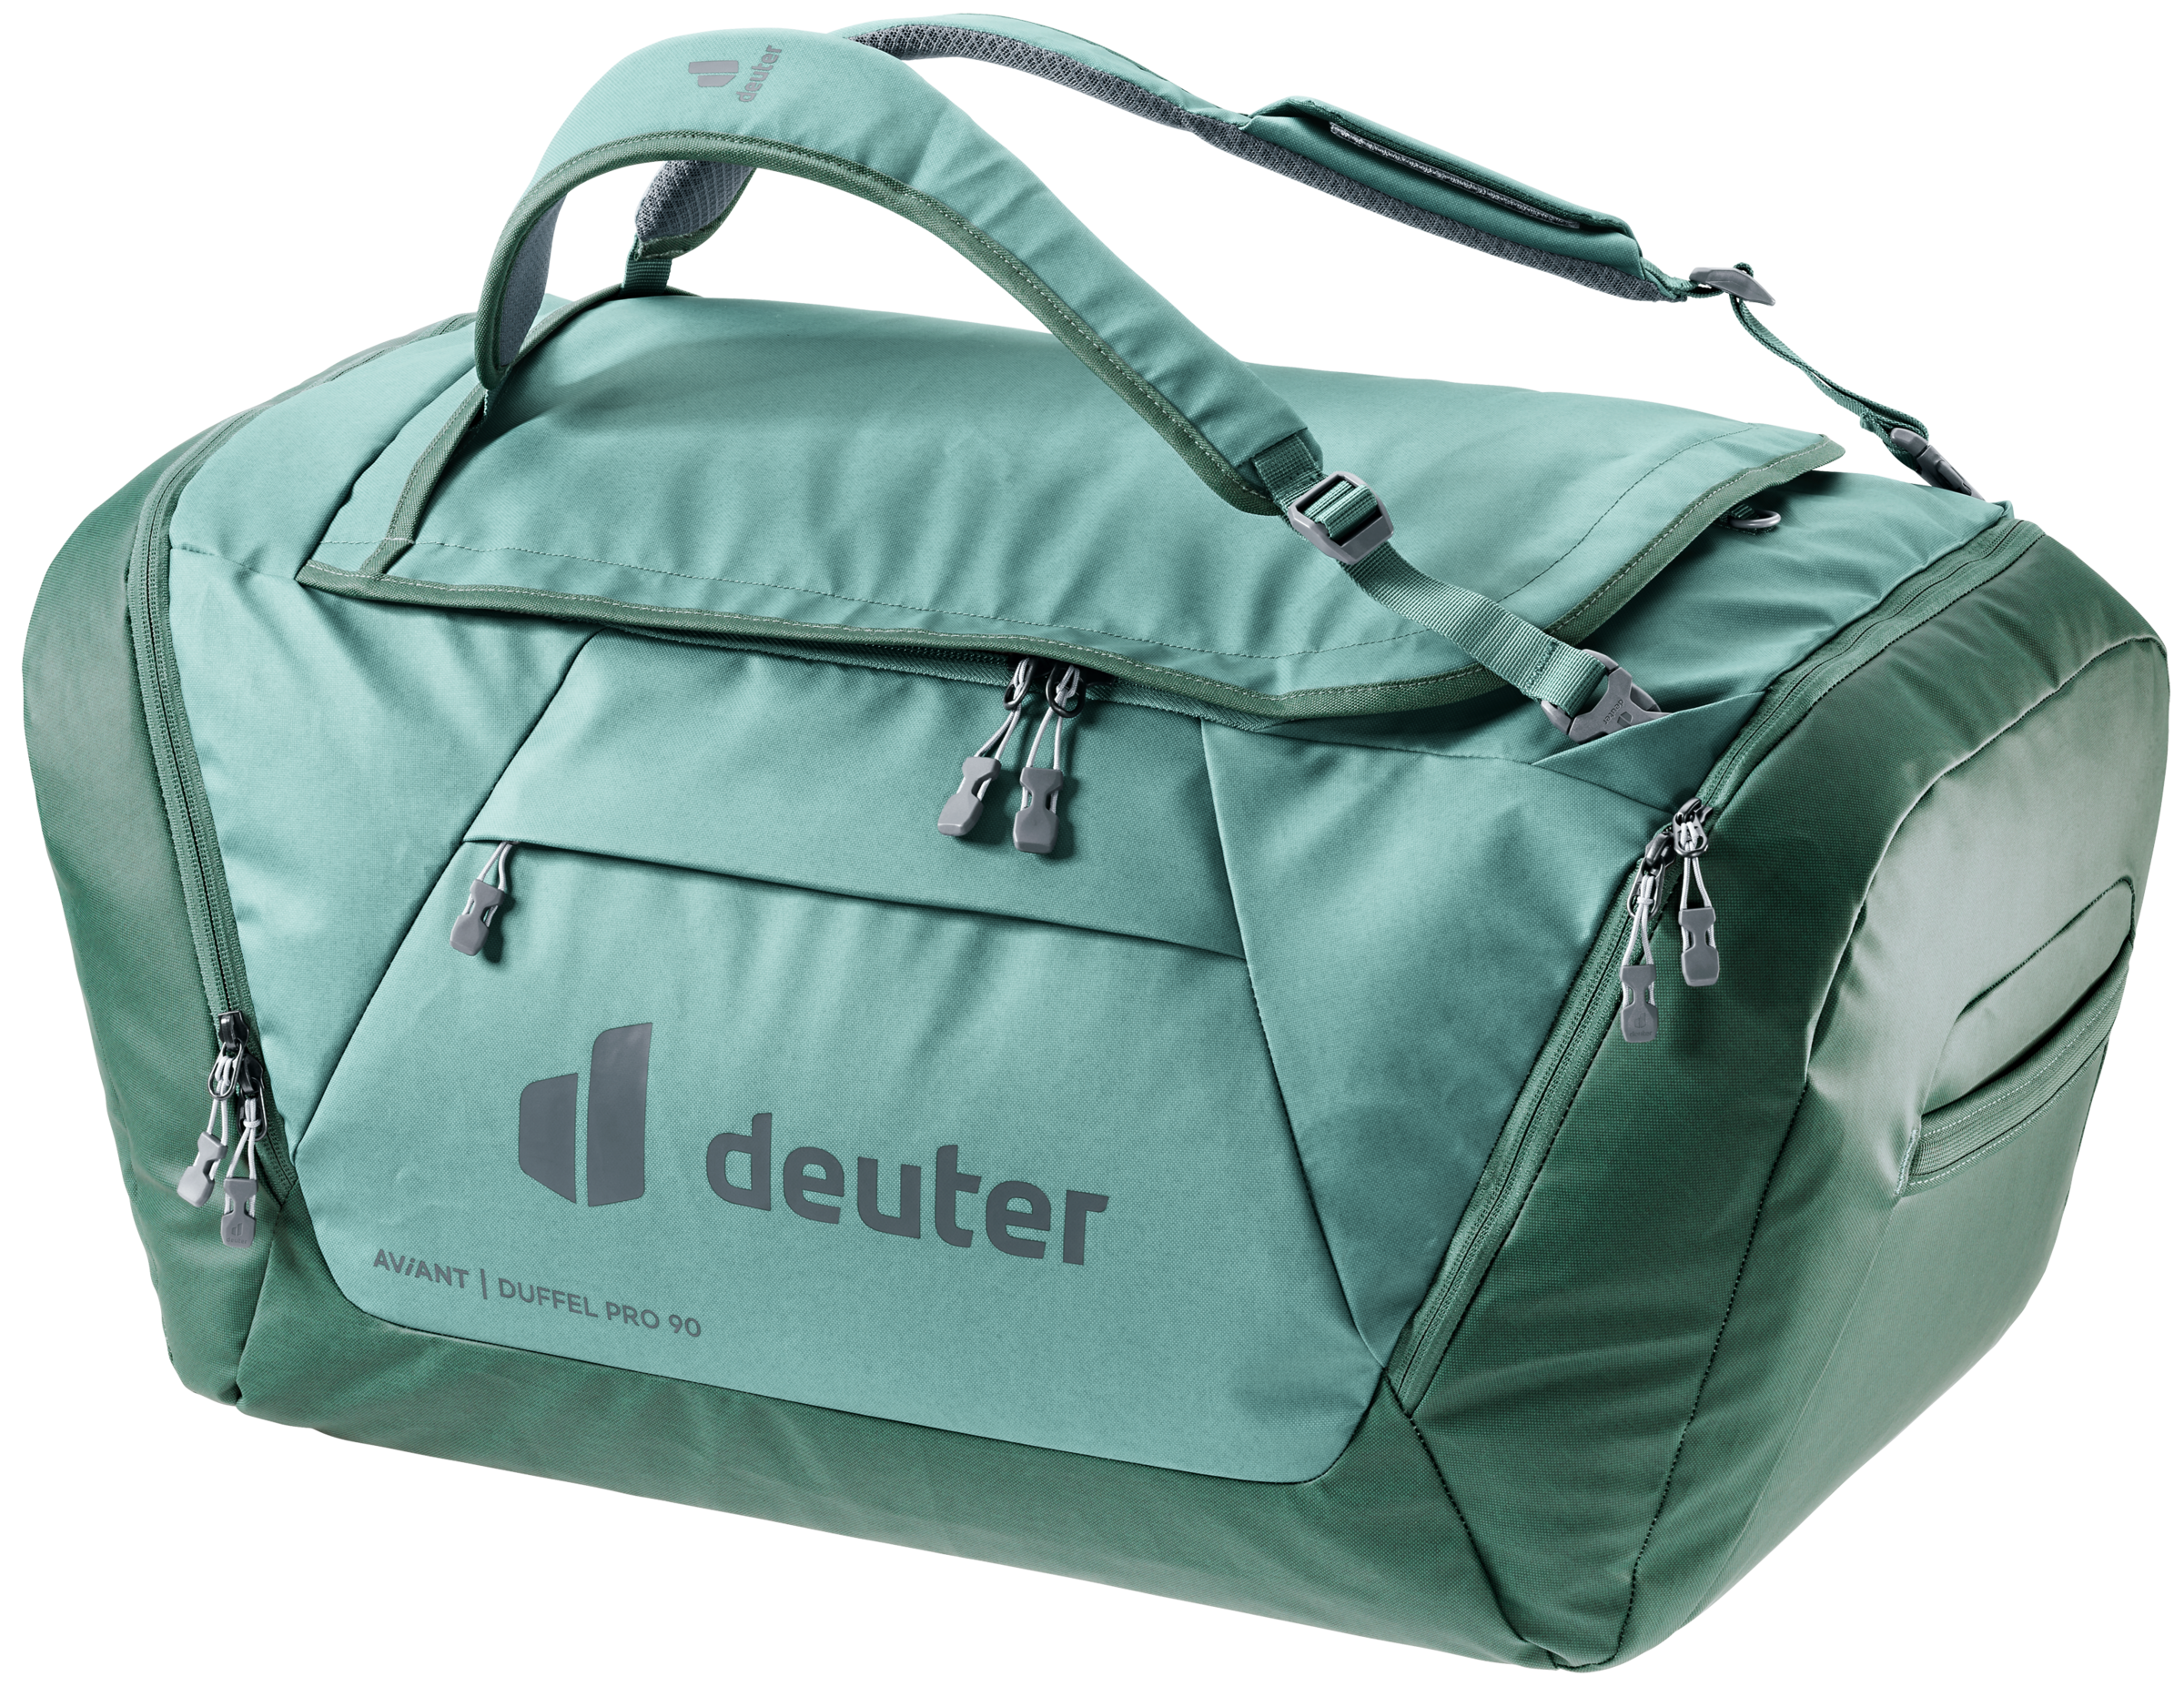 Deuter  Aviant Duffel Pro 90 - Duffle Bag - Grün (Jade/Seagreen)